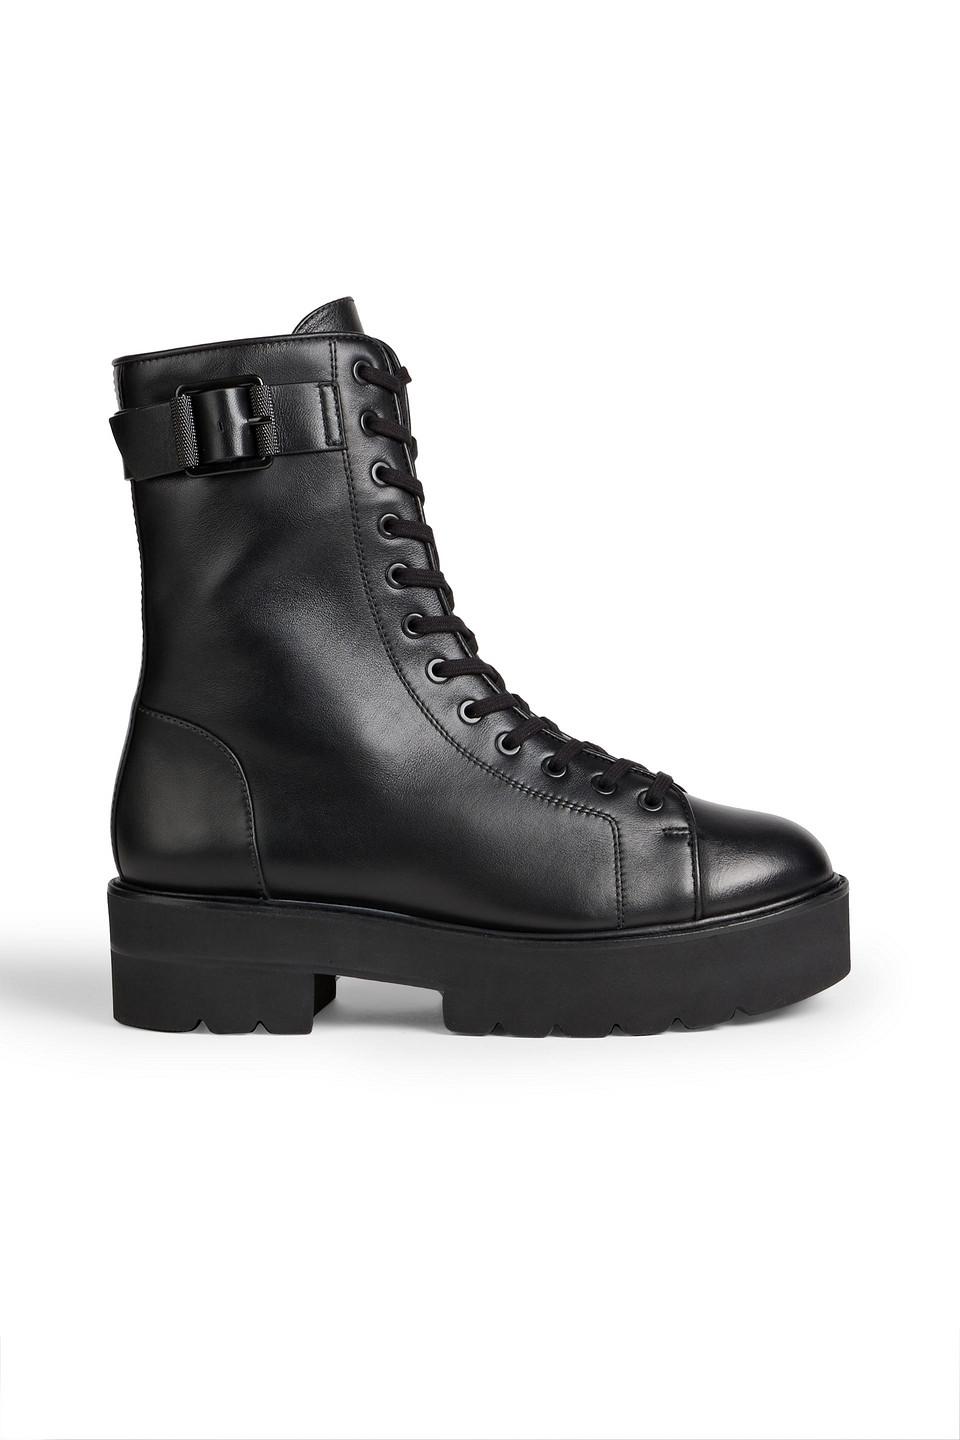 Stuart Weitzman Ryder Ultralift Leather Platform Combat Boots in Black ...